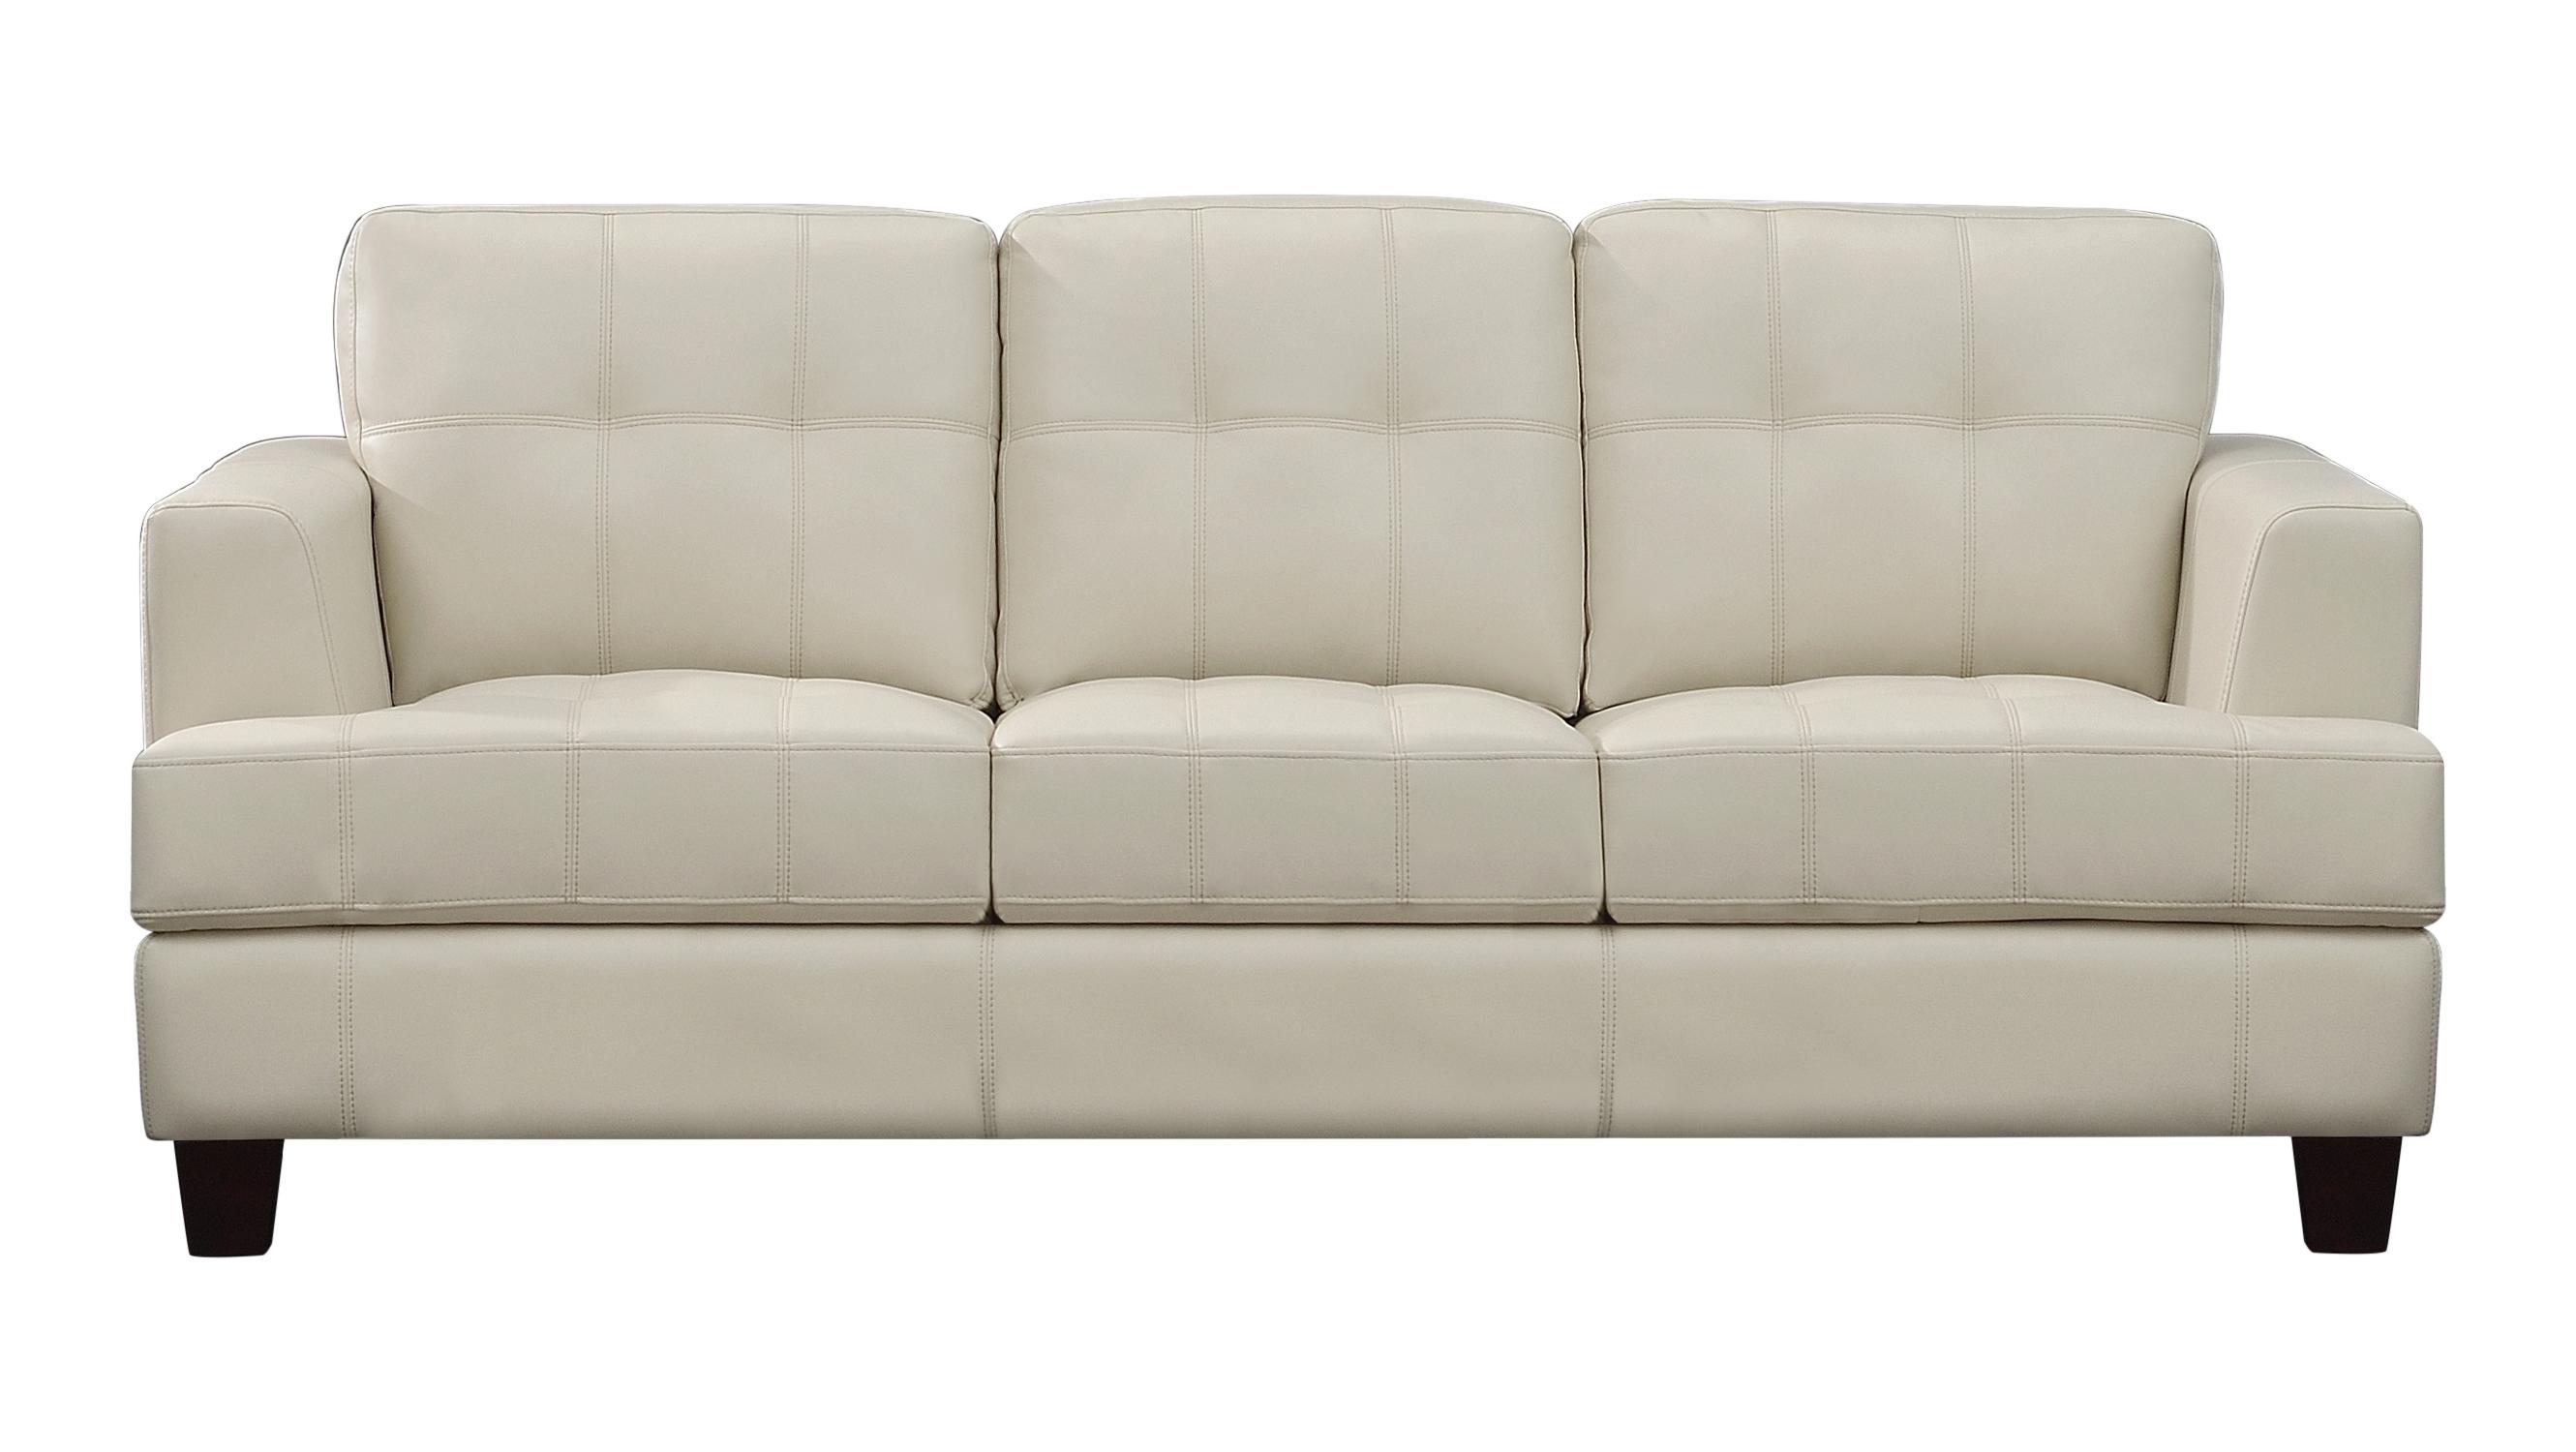 Transitional Sofa 501691 Samuel 501691 in Cream Leatherette